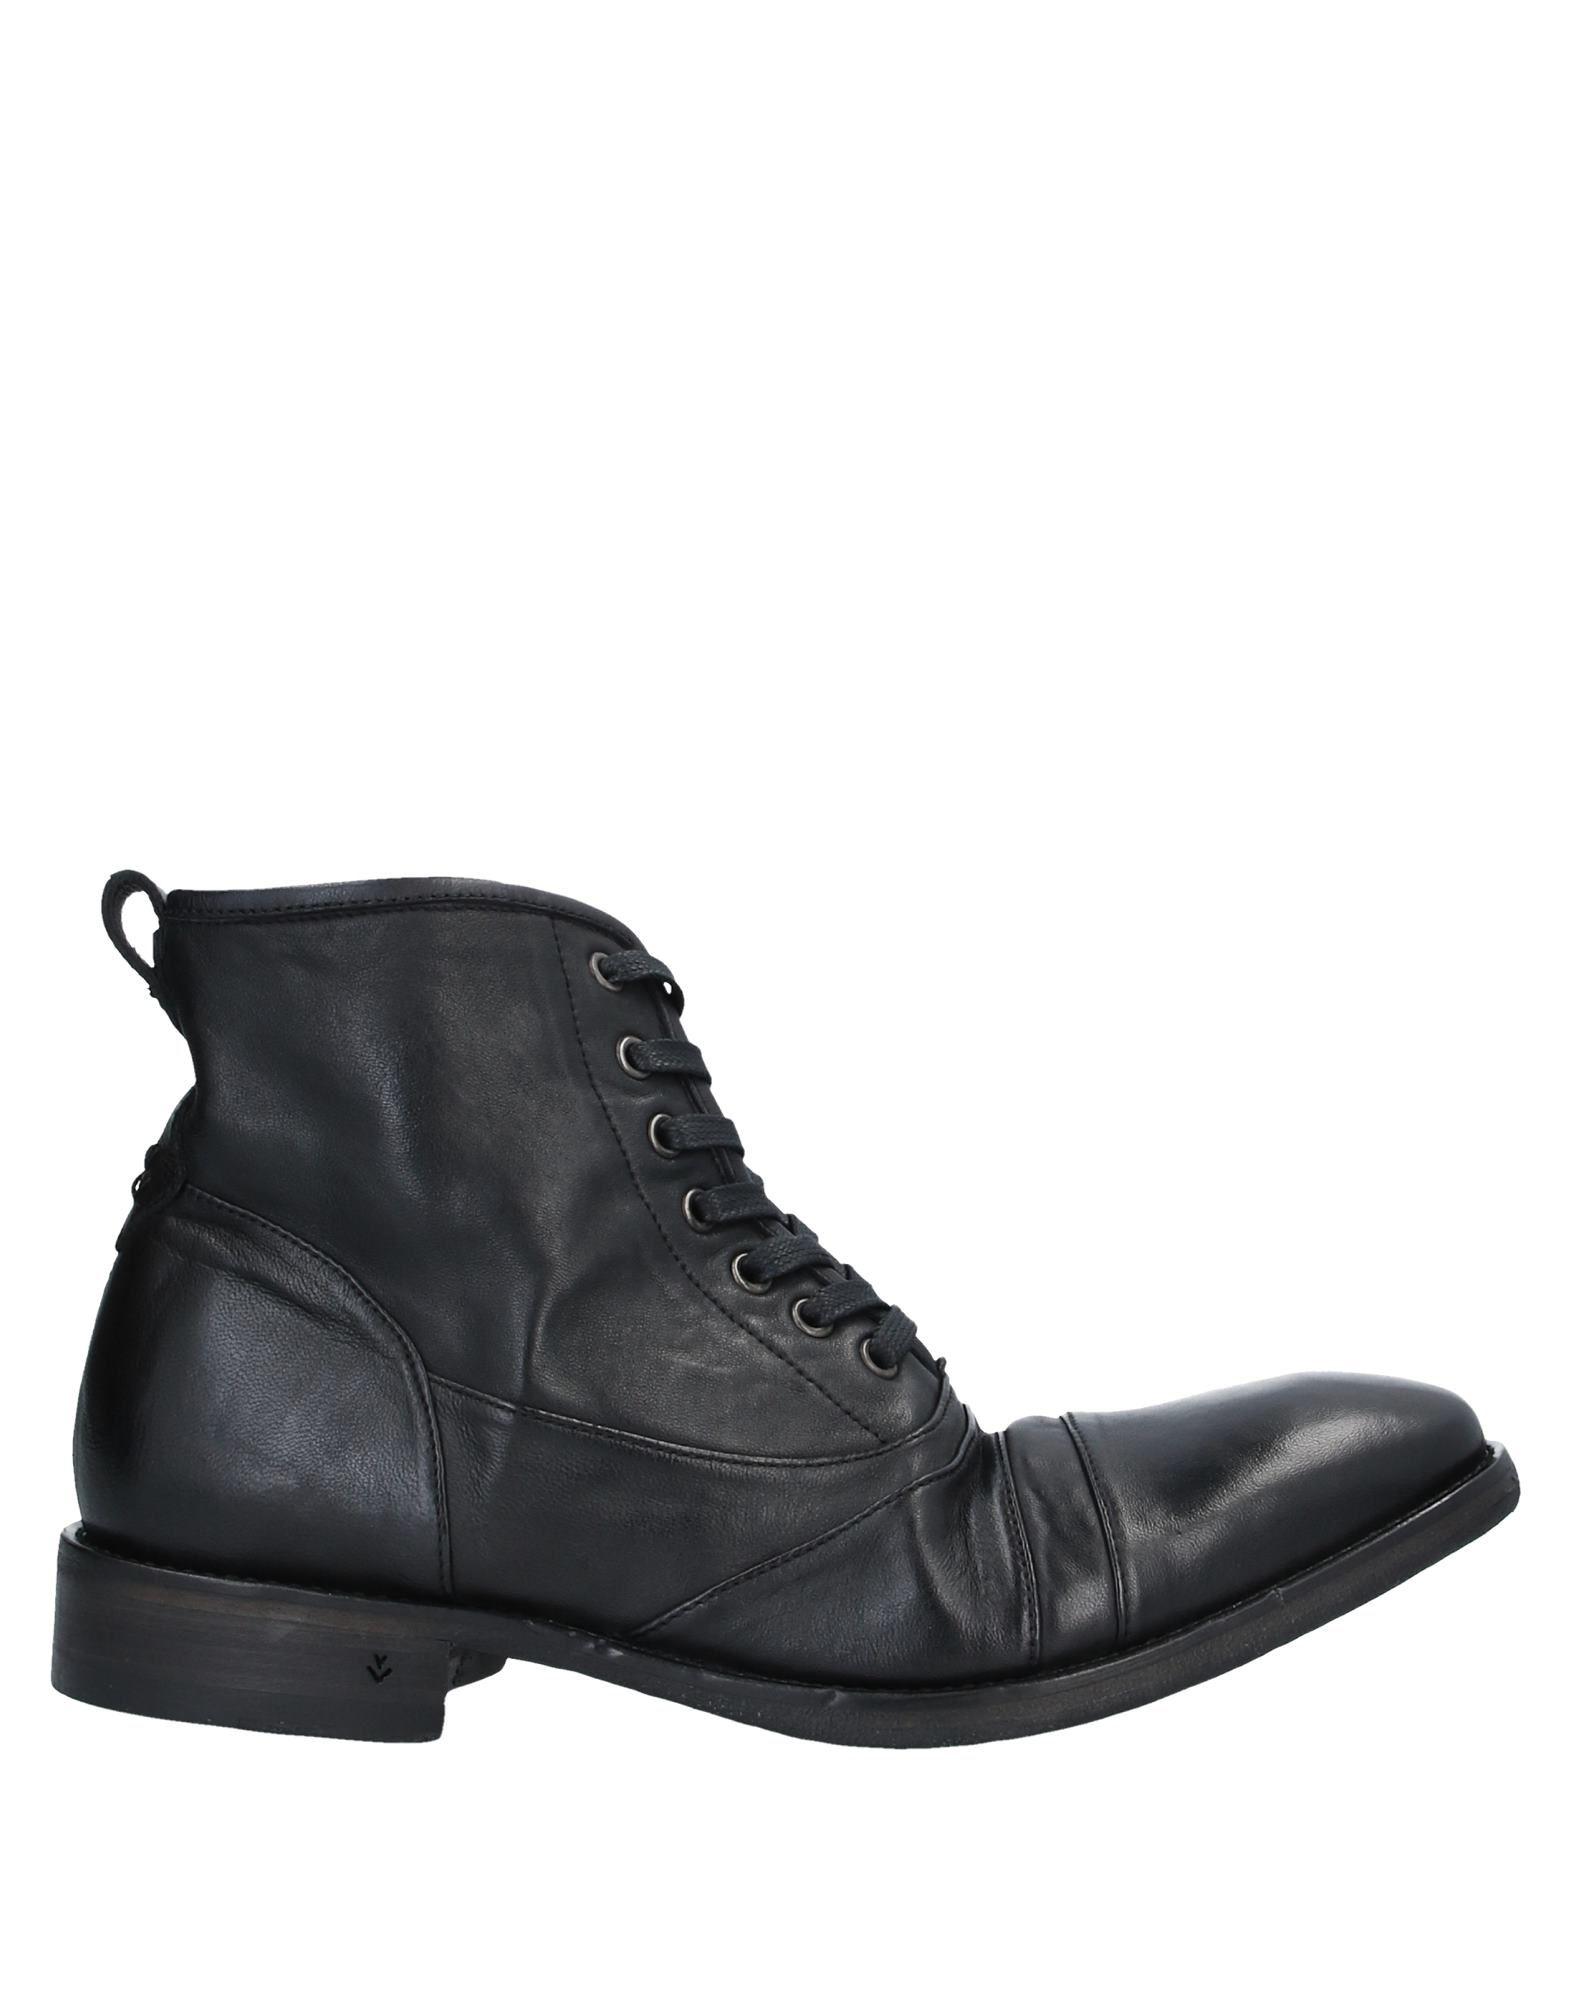 John Varvatos Leather Ankle Boots in Black for Men - Lyst